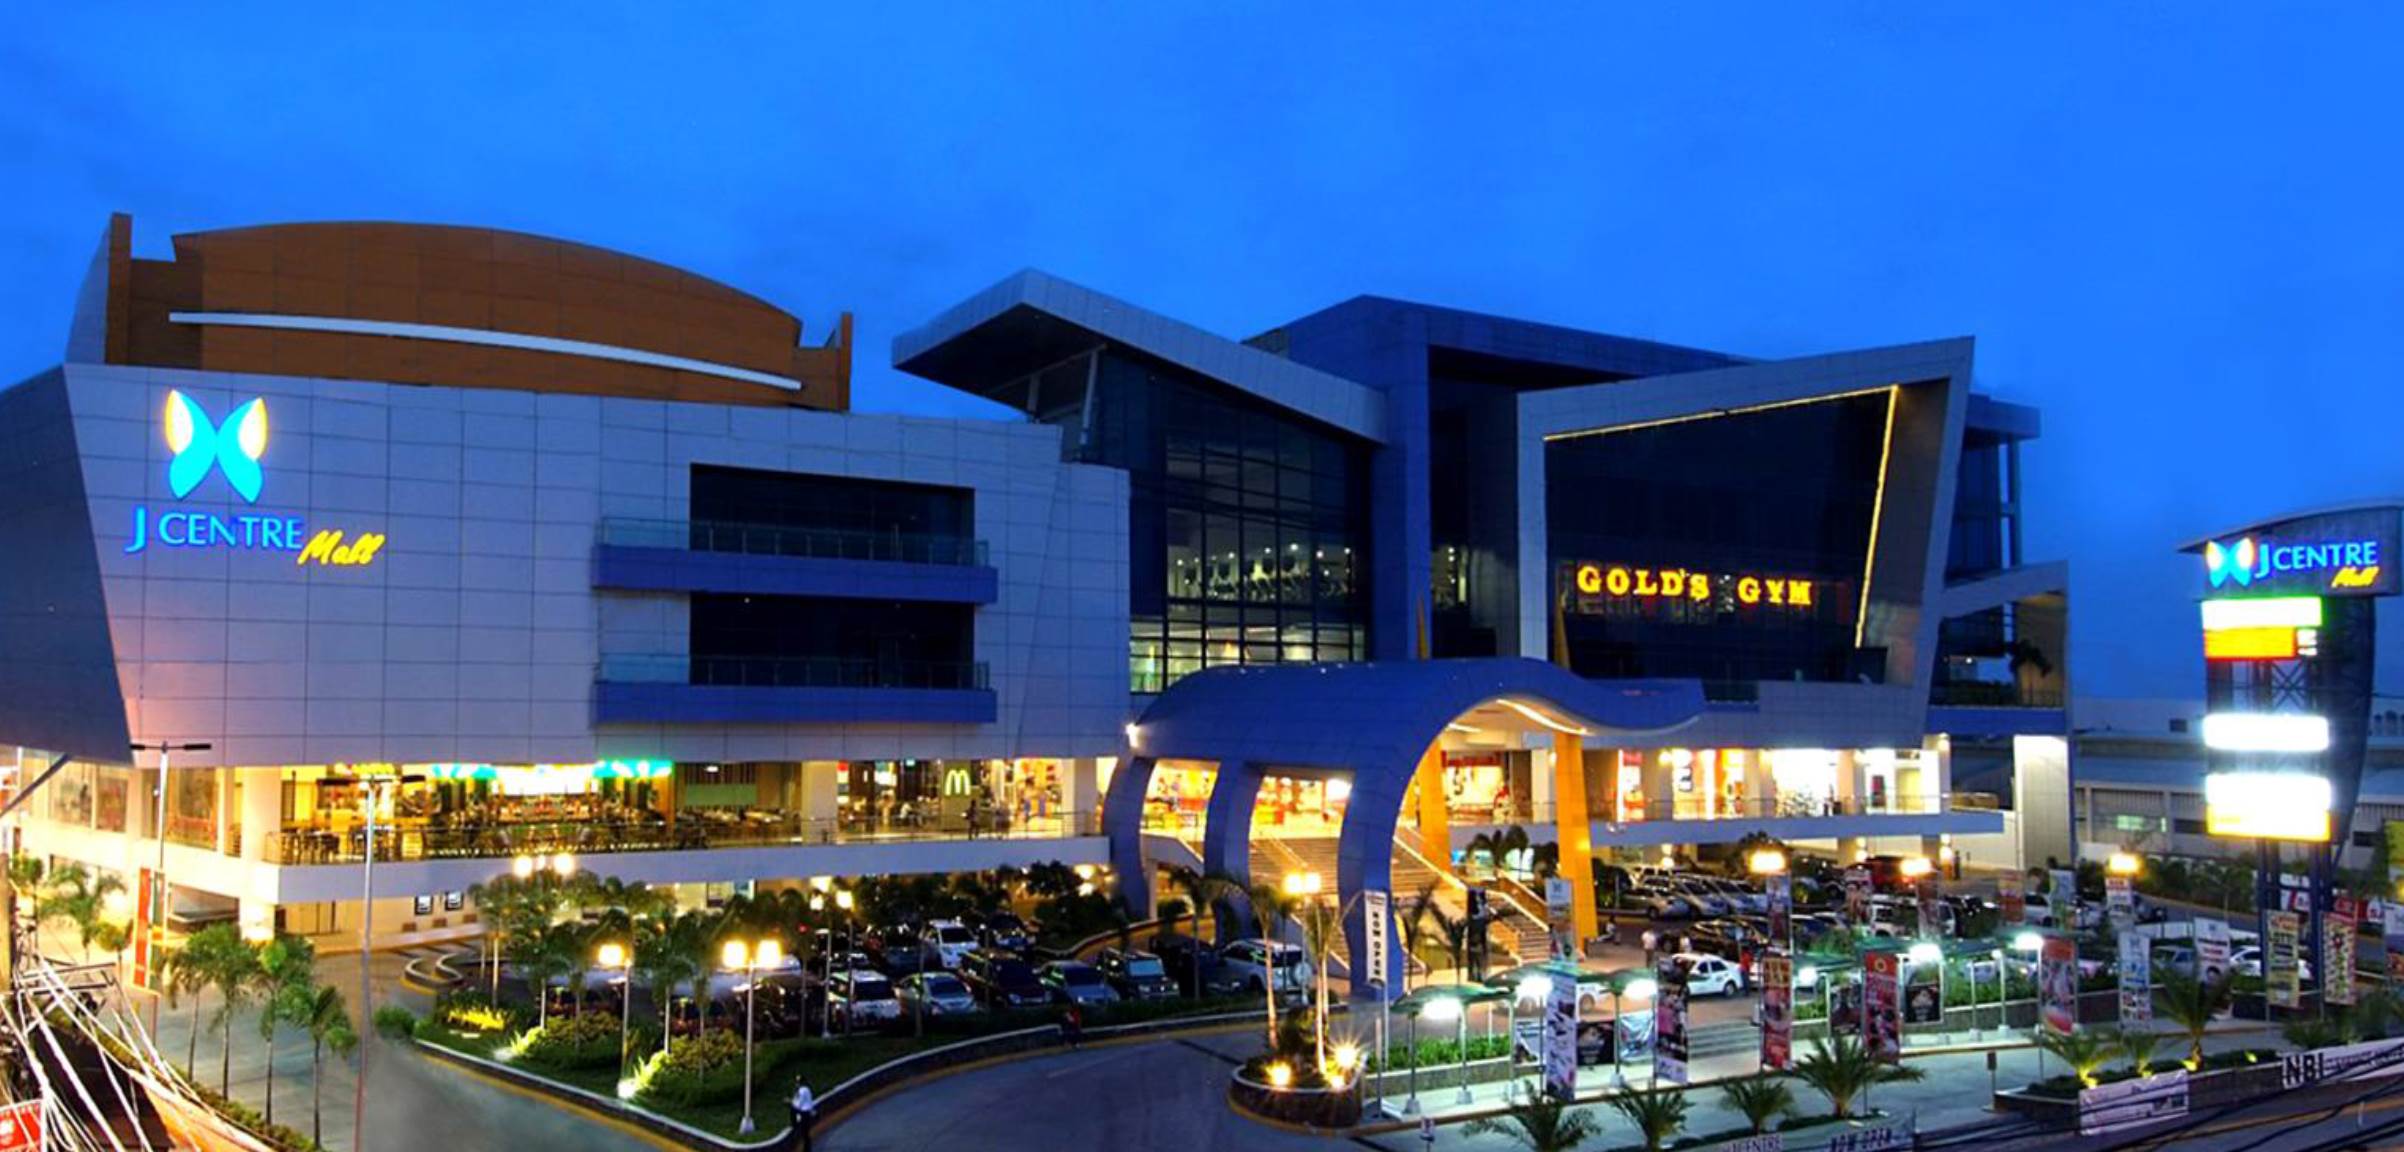 Building Feature: J Centre Mall in Mandaue City, Cebu